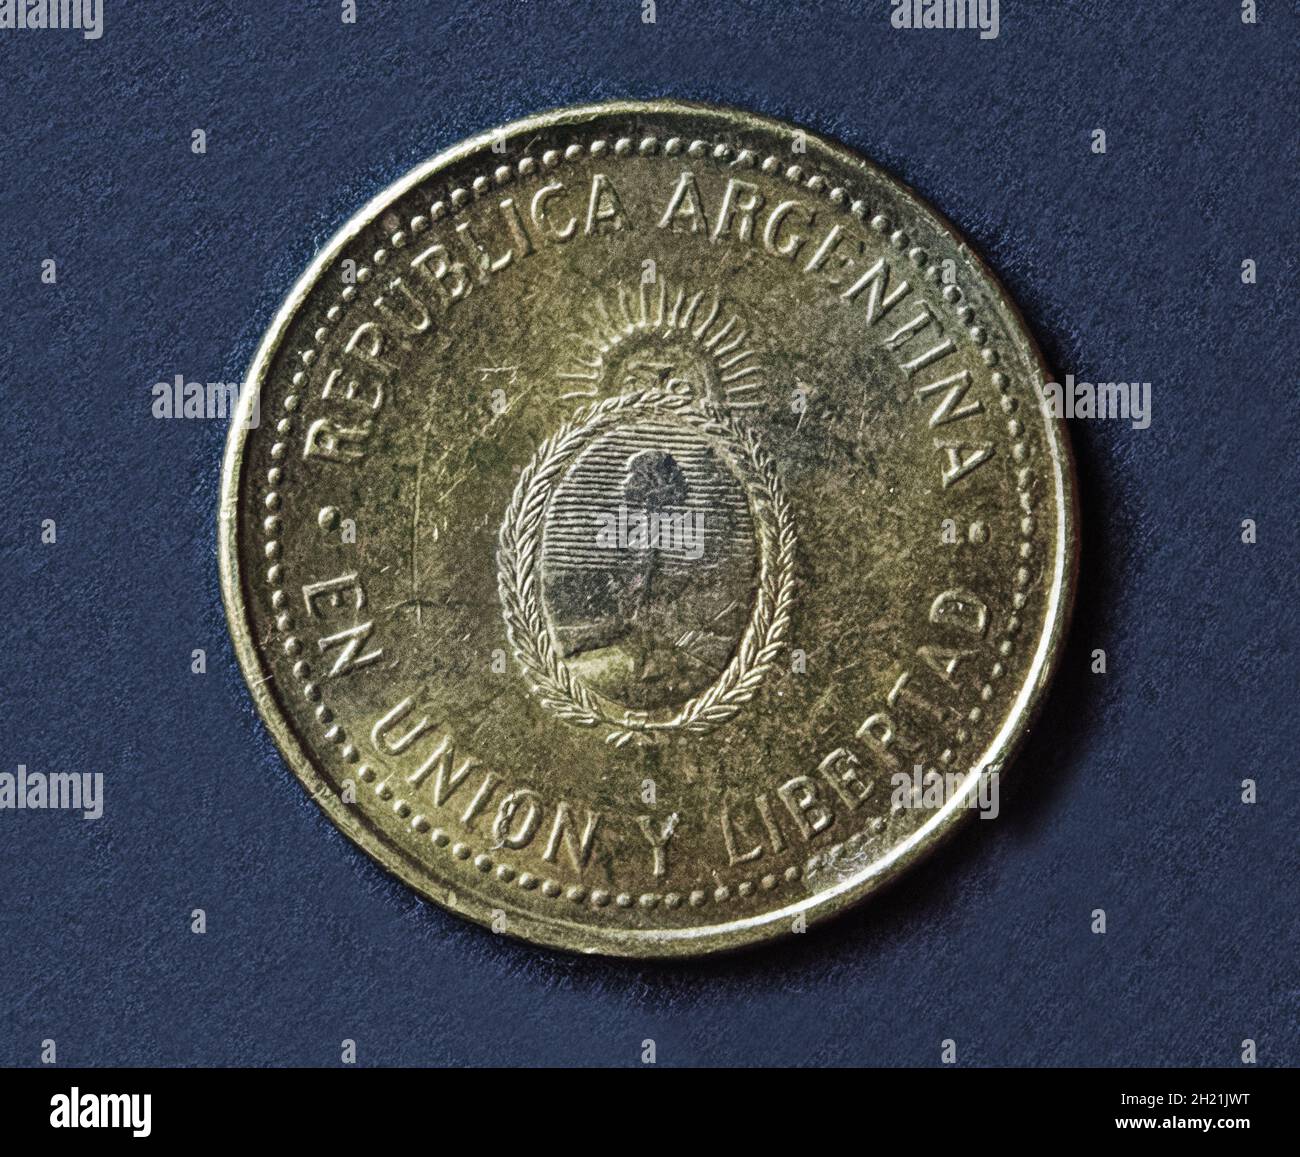 Monedas antiguas de argentina fotografías e imágenes de alta resolución -  Alamy